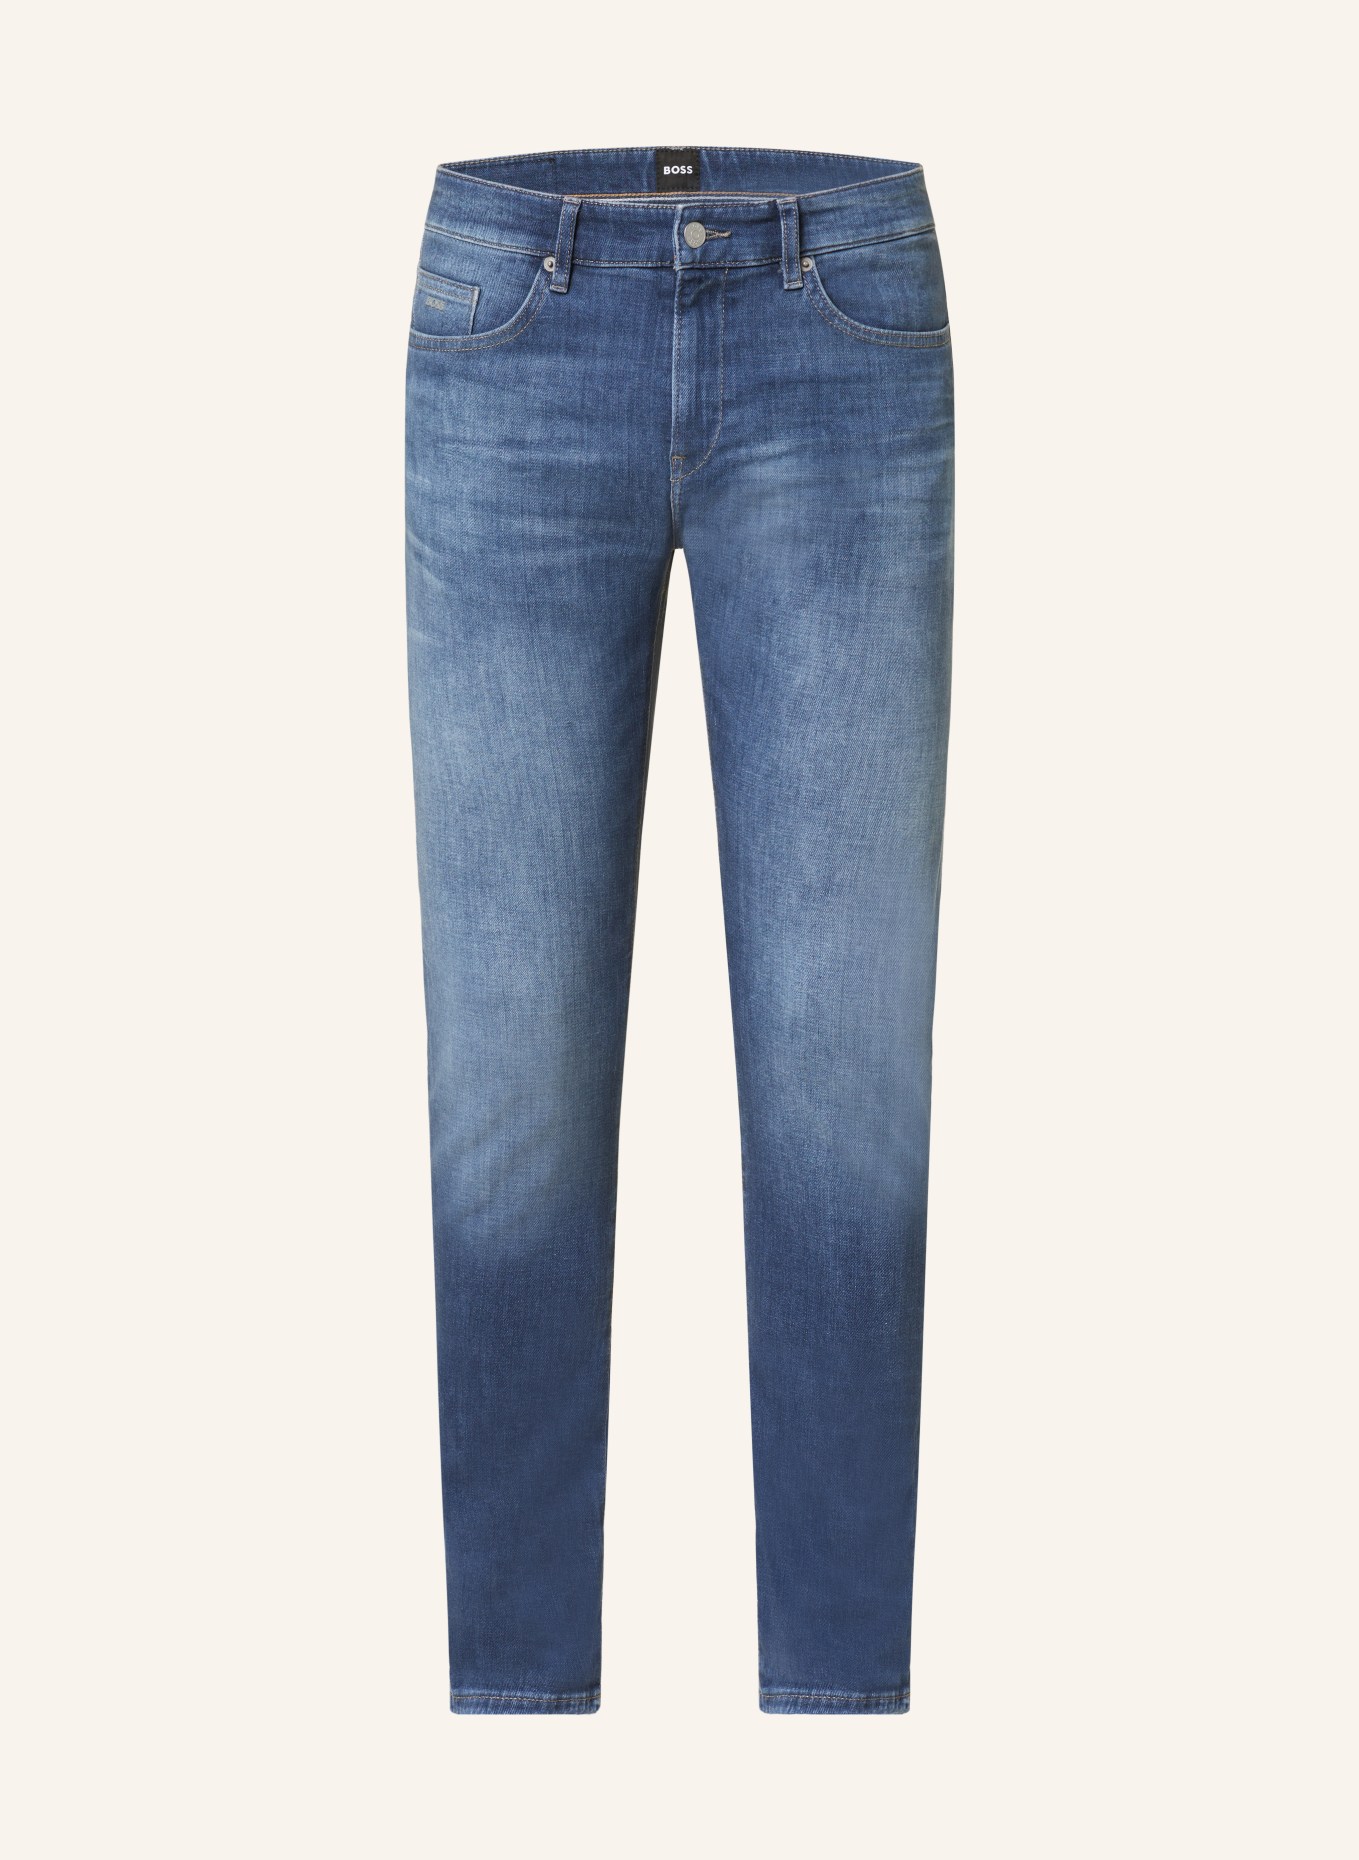 BOSS Jeans DELAWARE Slim Fit, Farbe: 422 MEDIUM BLUE (Bild 1)